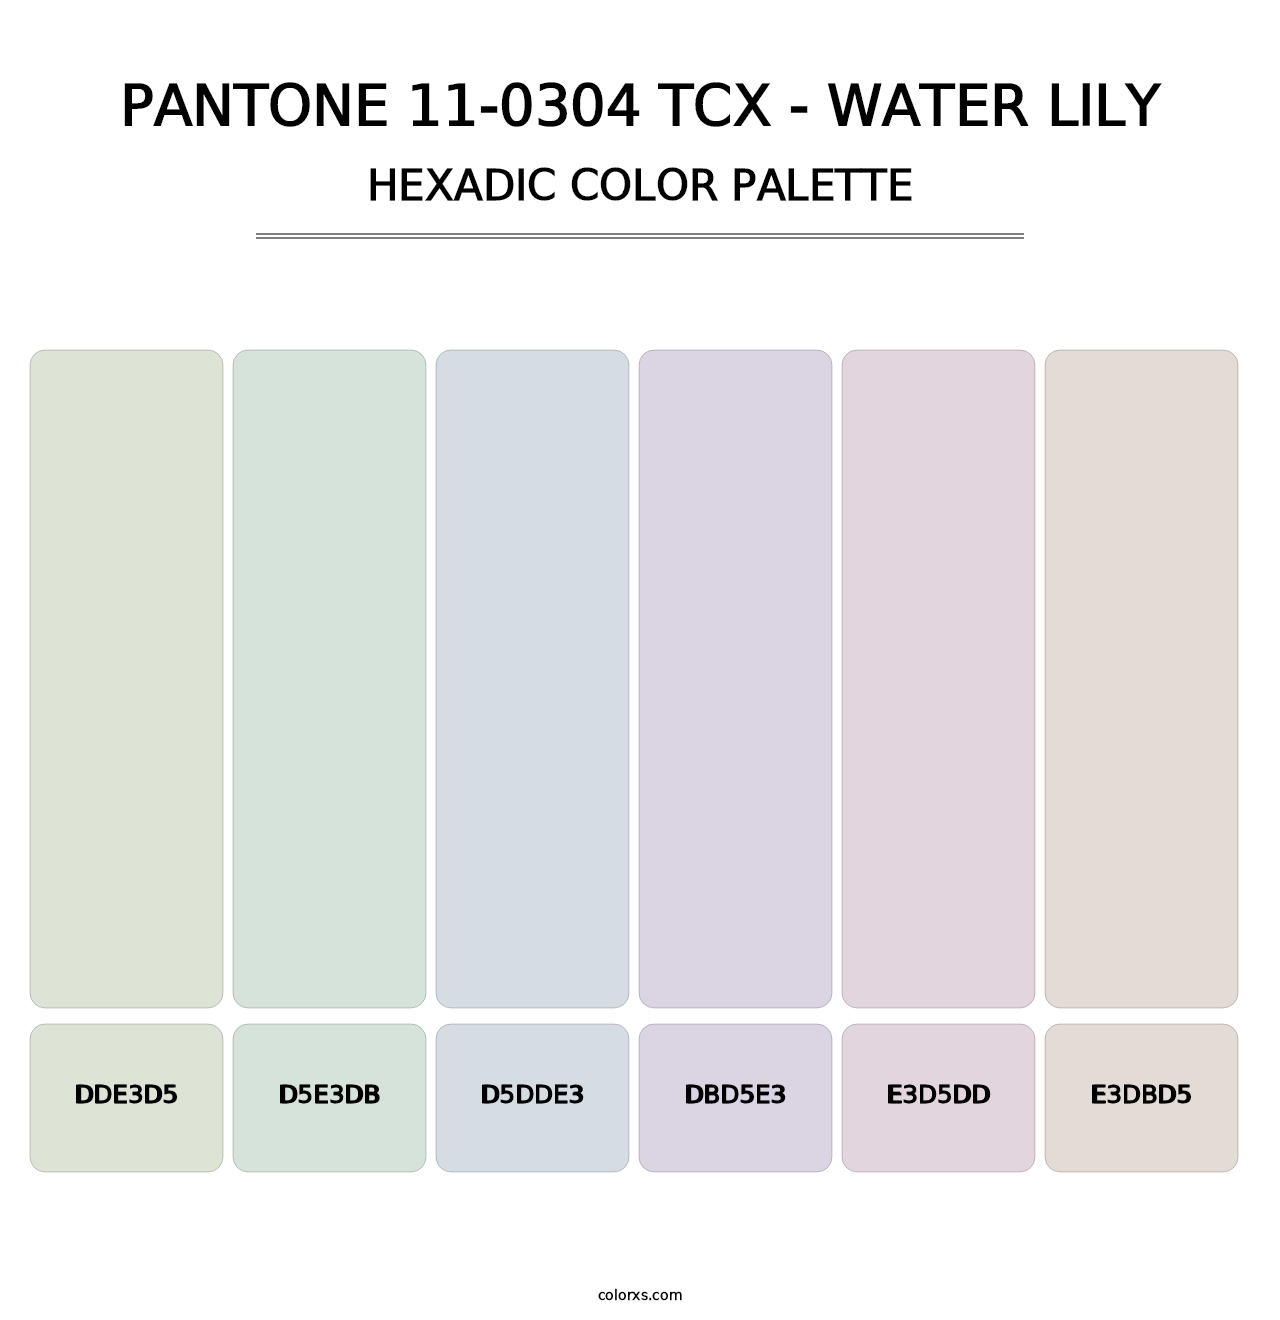 PANTONE 11-0304 TCX - Water Lily - Hexadic Color Palette